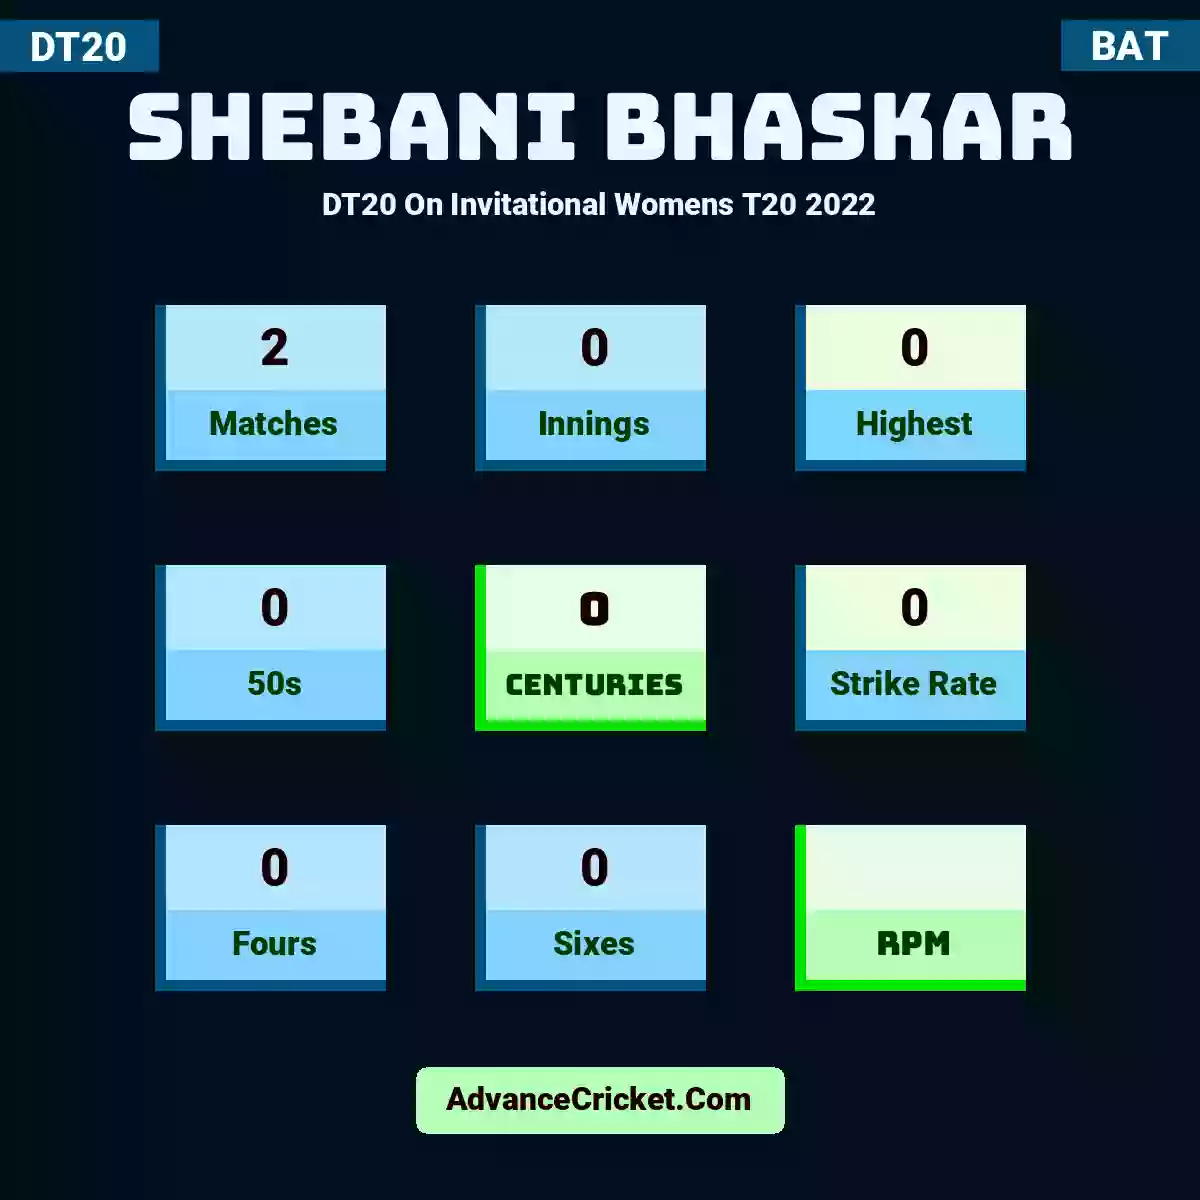 Shebani Bhaskar DT20  On Invitational Womens T20 2022, Shebani Bhaskar played 2 matches, scored 0 runs as highest, 0 half-centuries, and 0 centuries, with a strike rate of 0. S.Bhaskar hit 0 fours and 0 sixes.